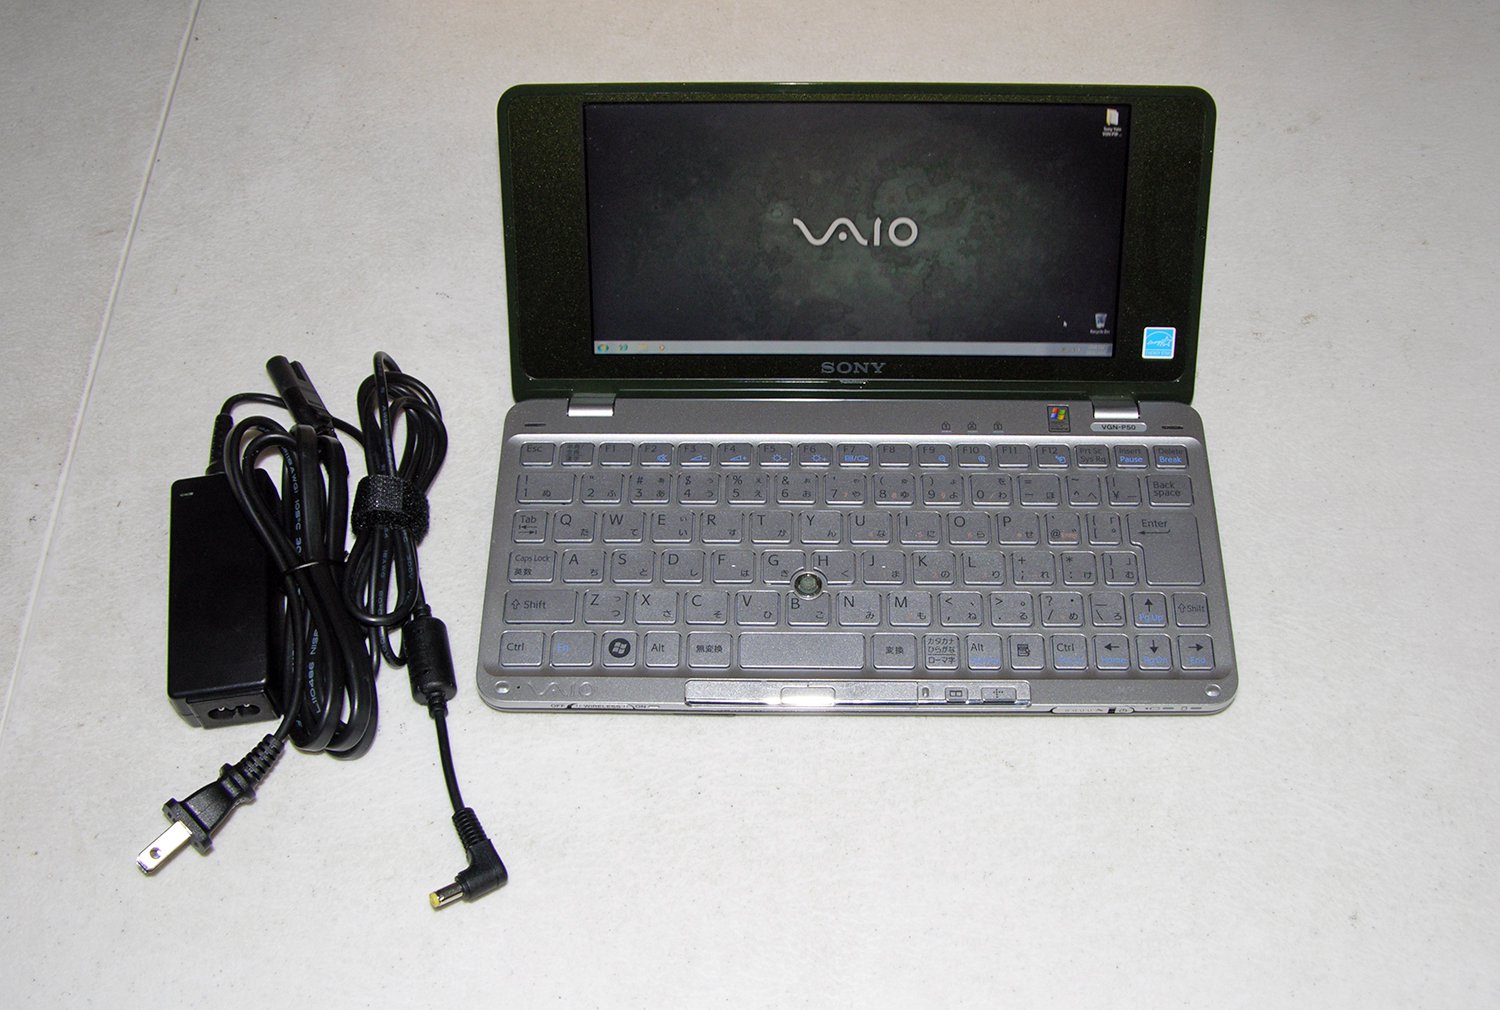 Sony Vaio P Lifestyle Pocket Pc Vgn P50 Intel Atom 1 33ghz